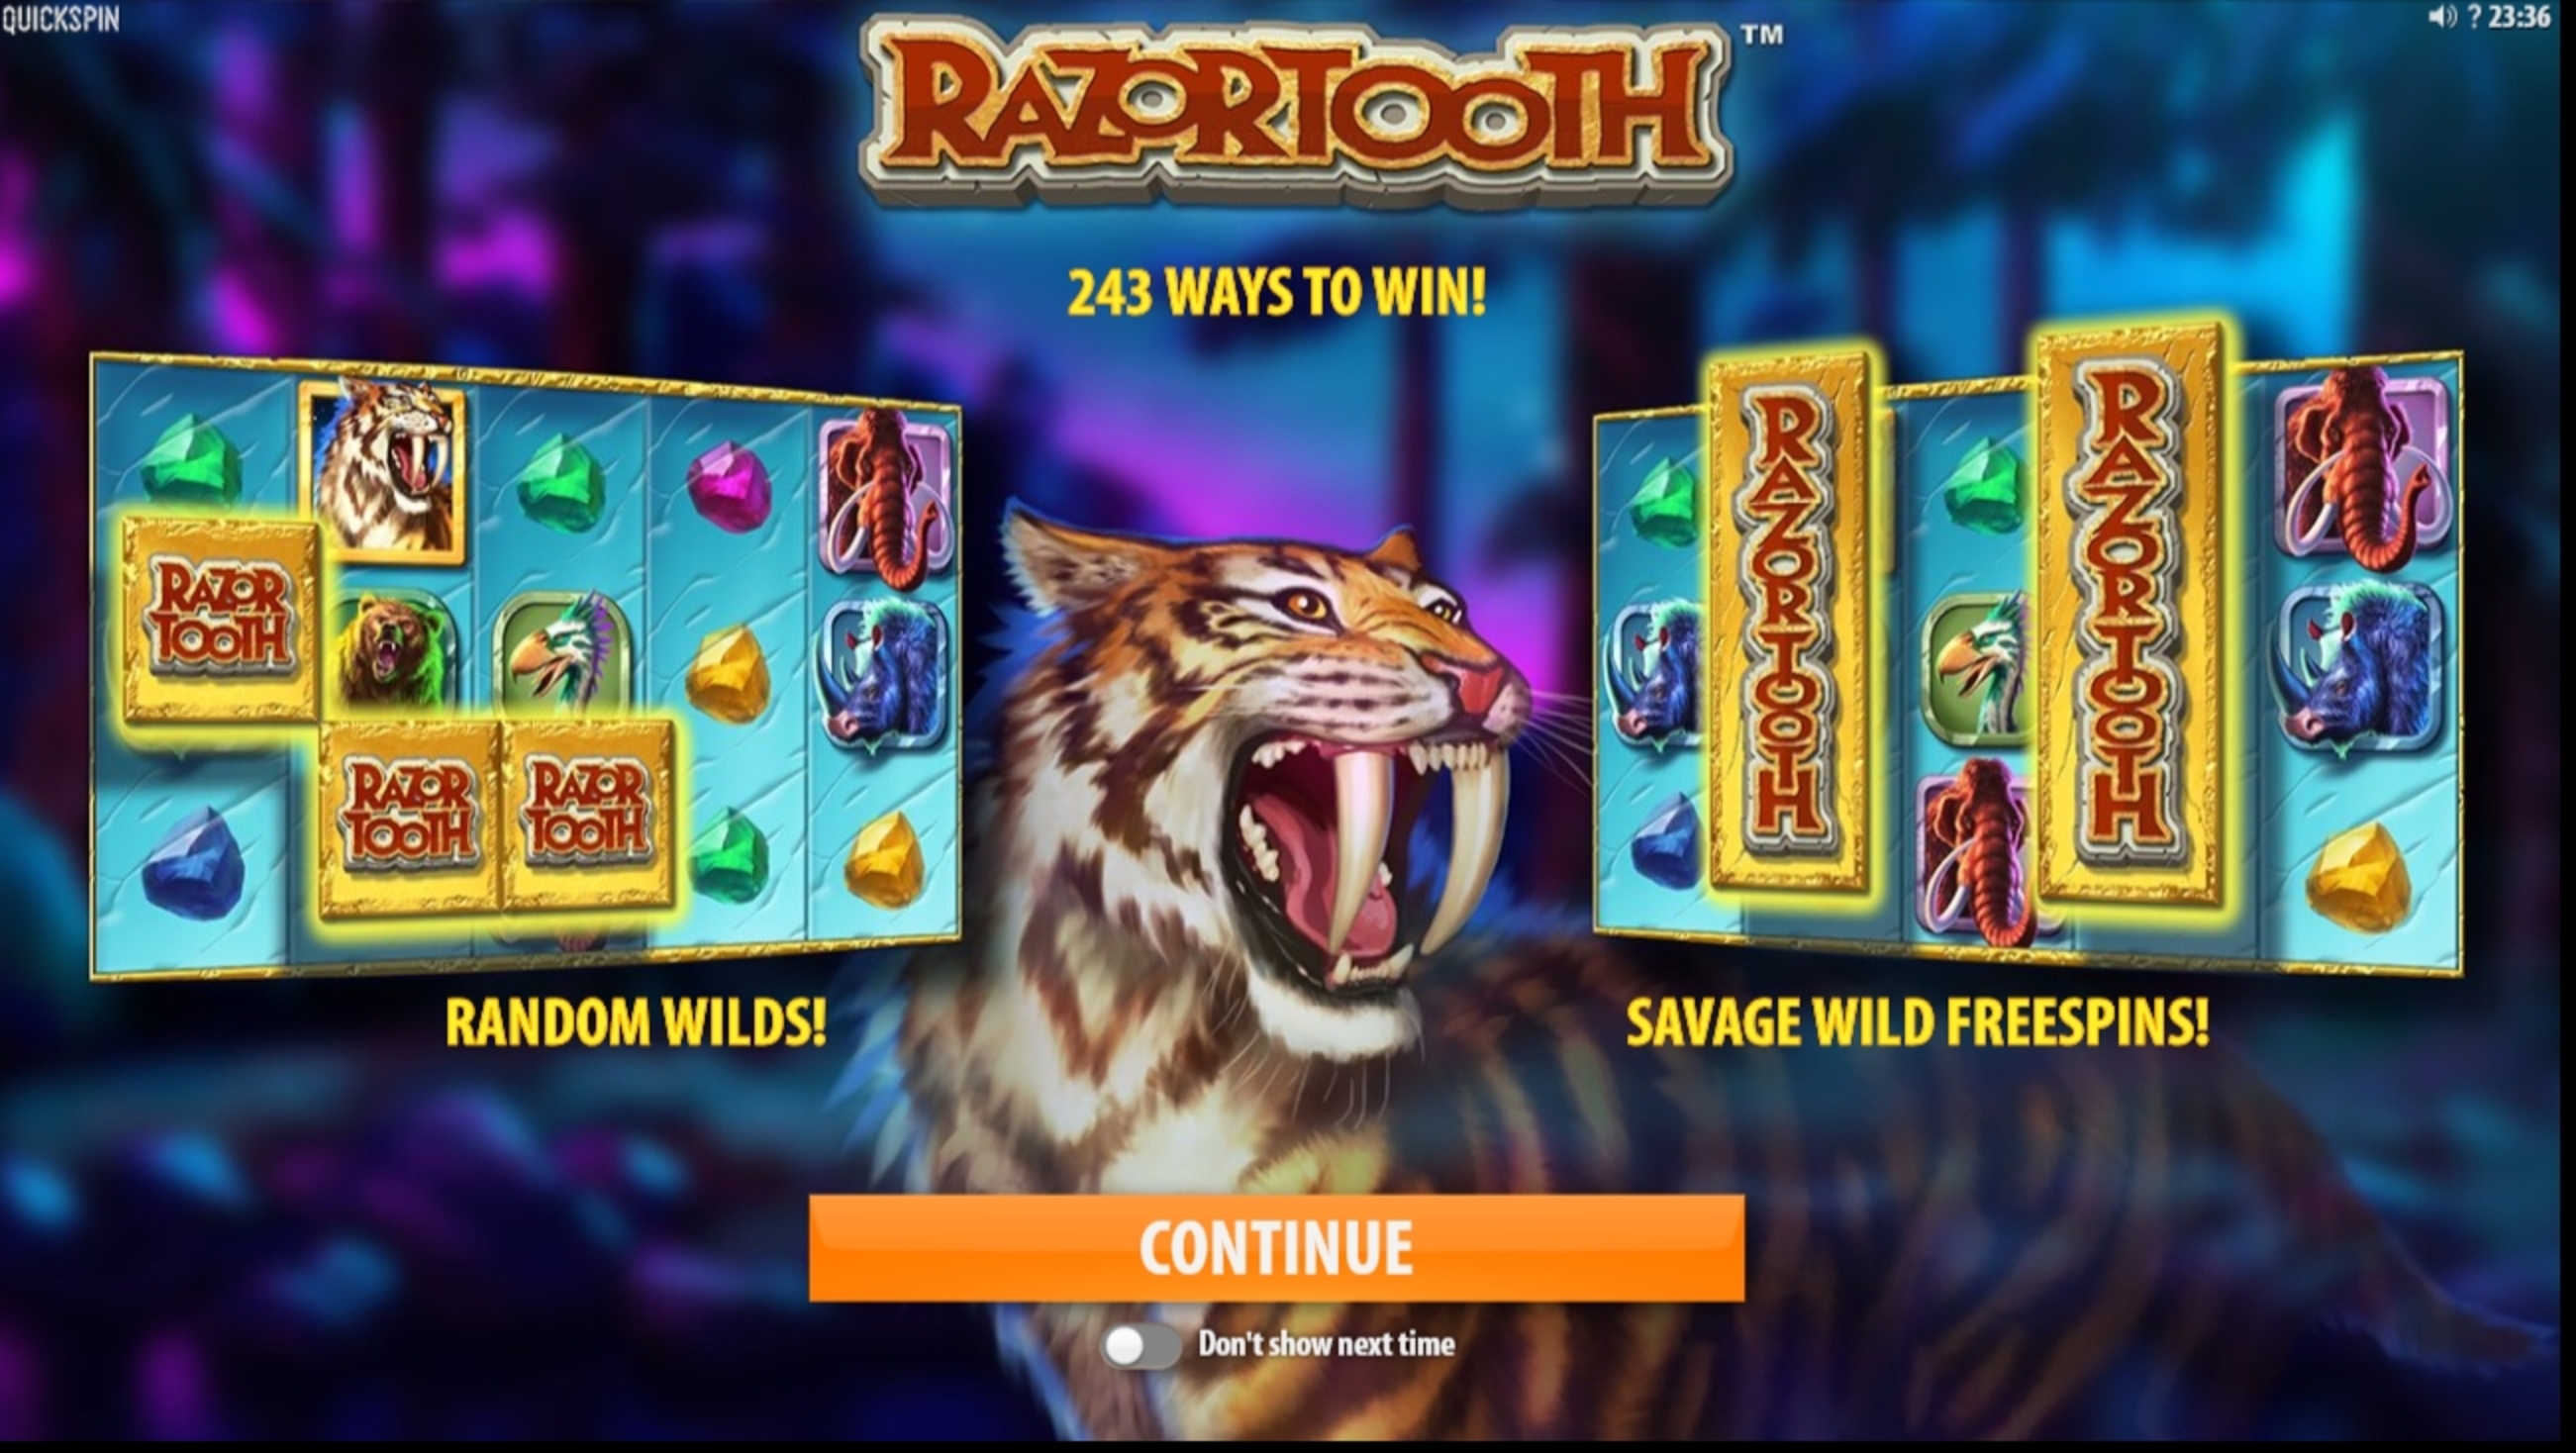 Play Razortooth Free Casino Slot Game by Quickspin